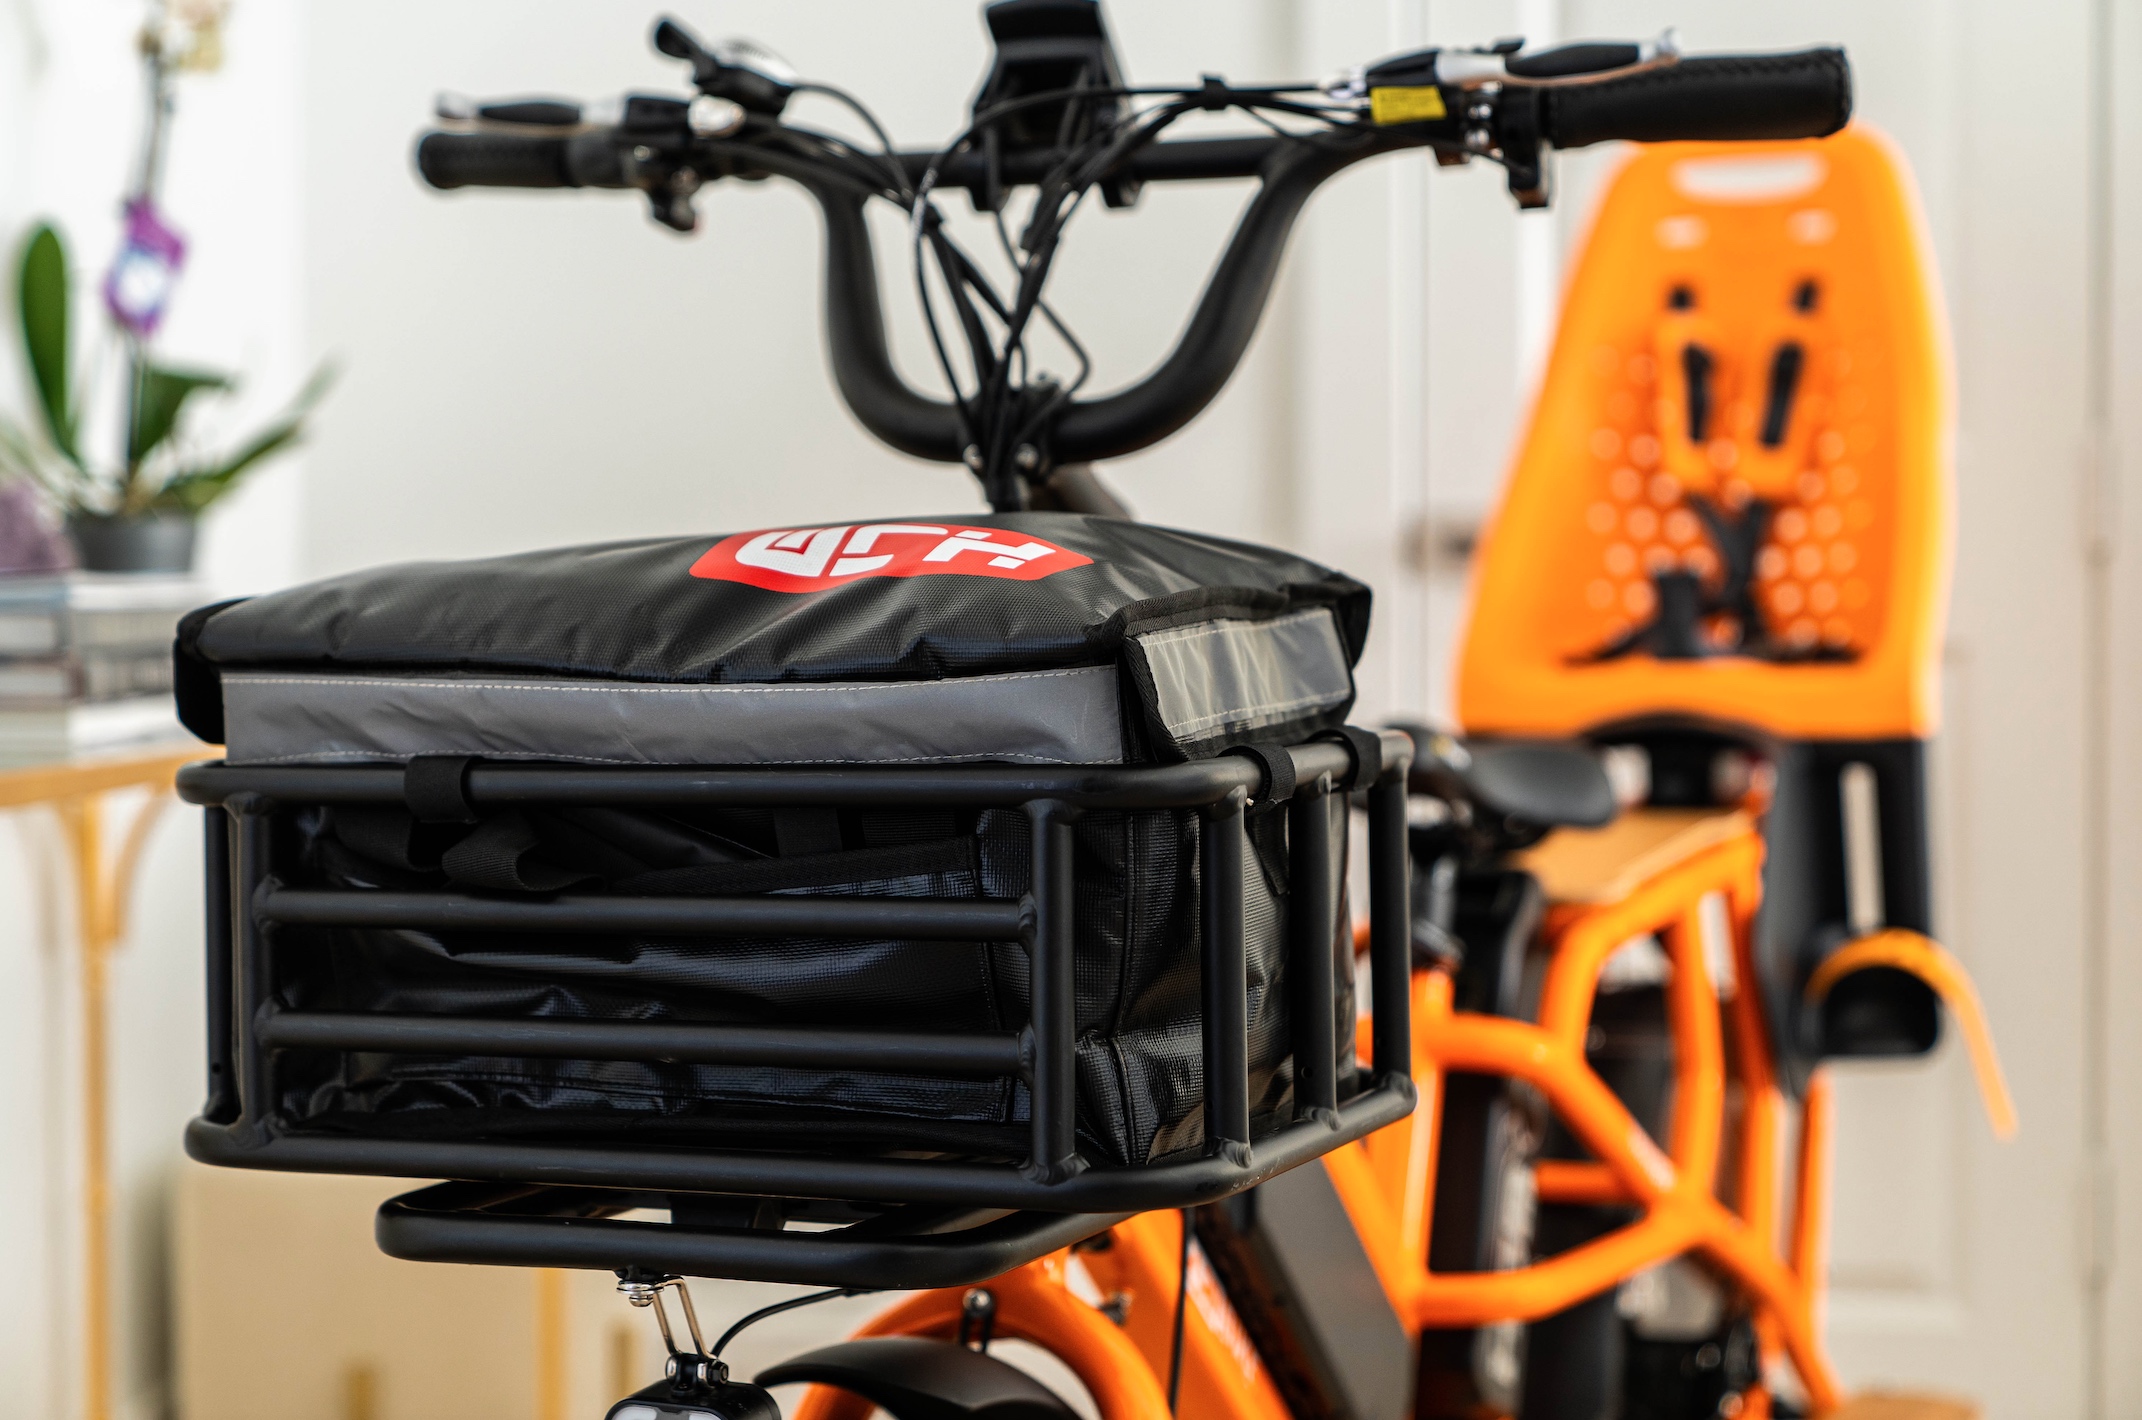 HJM Transer Cargo e-bike insulated bag mounted on bike.